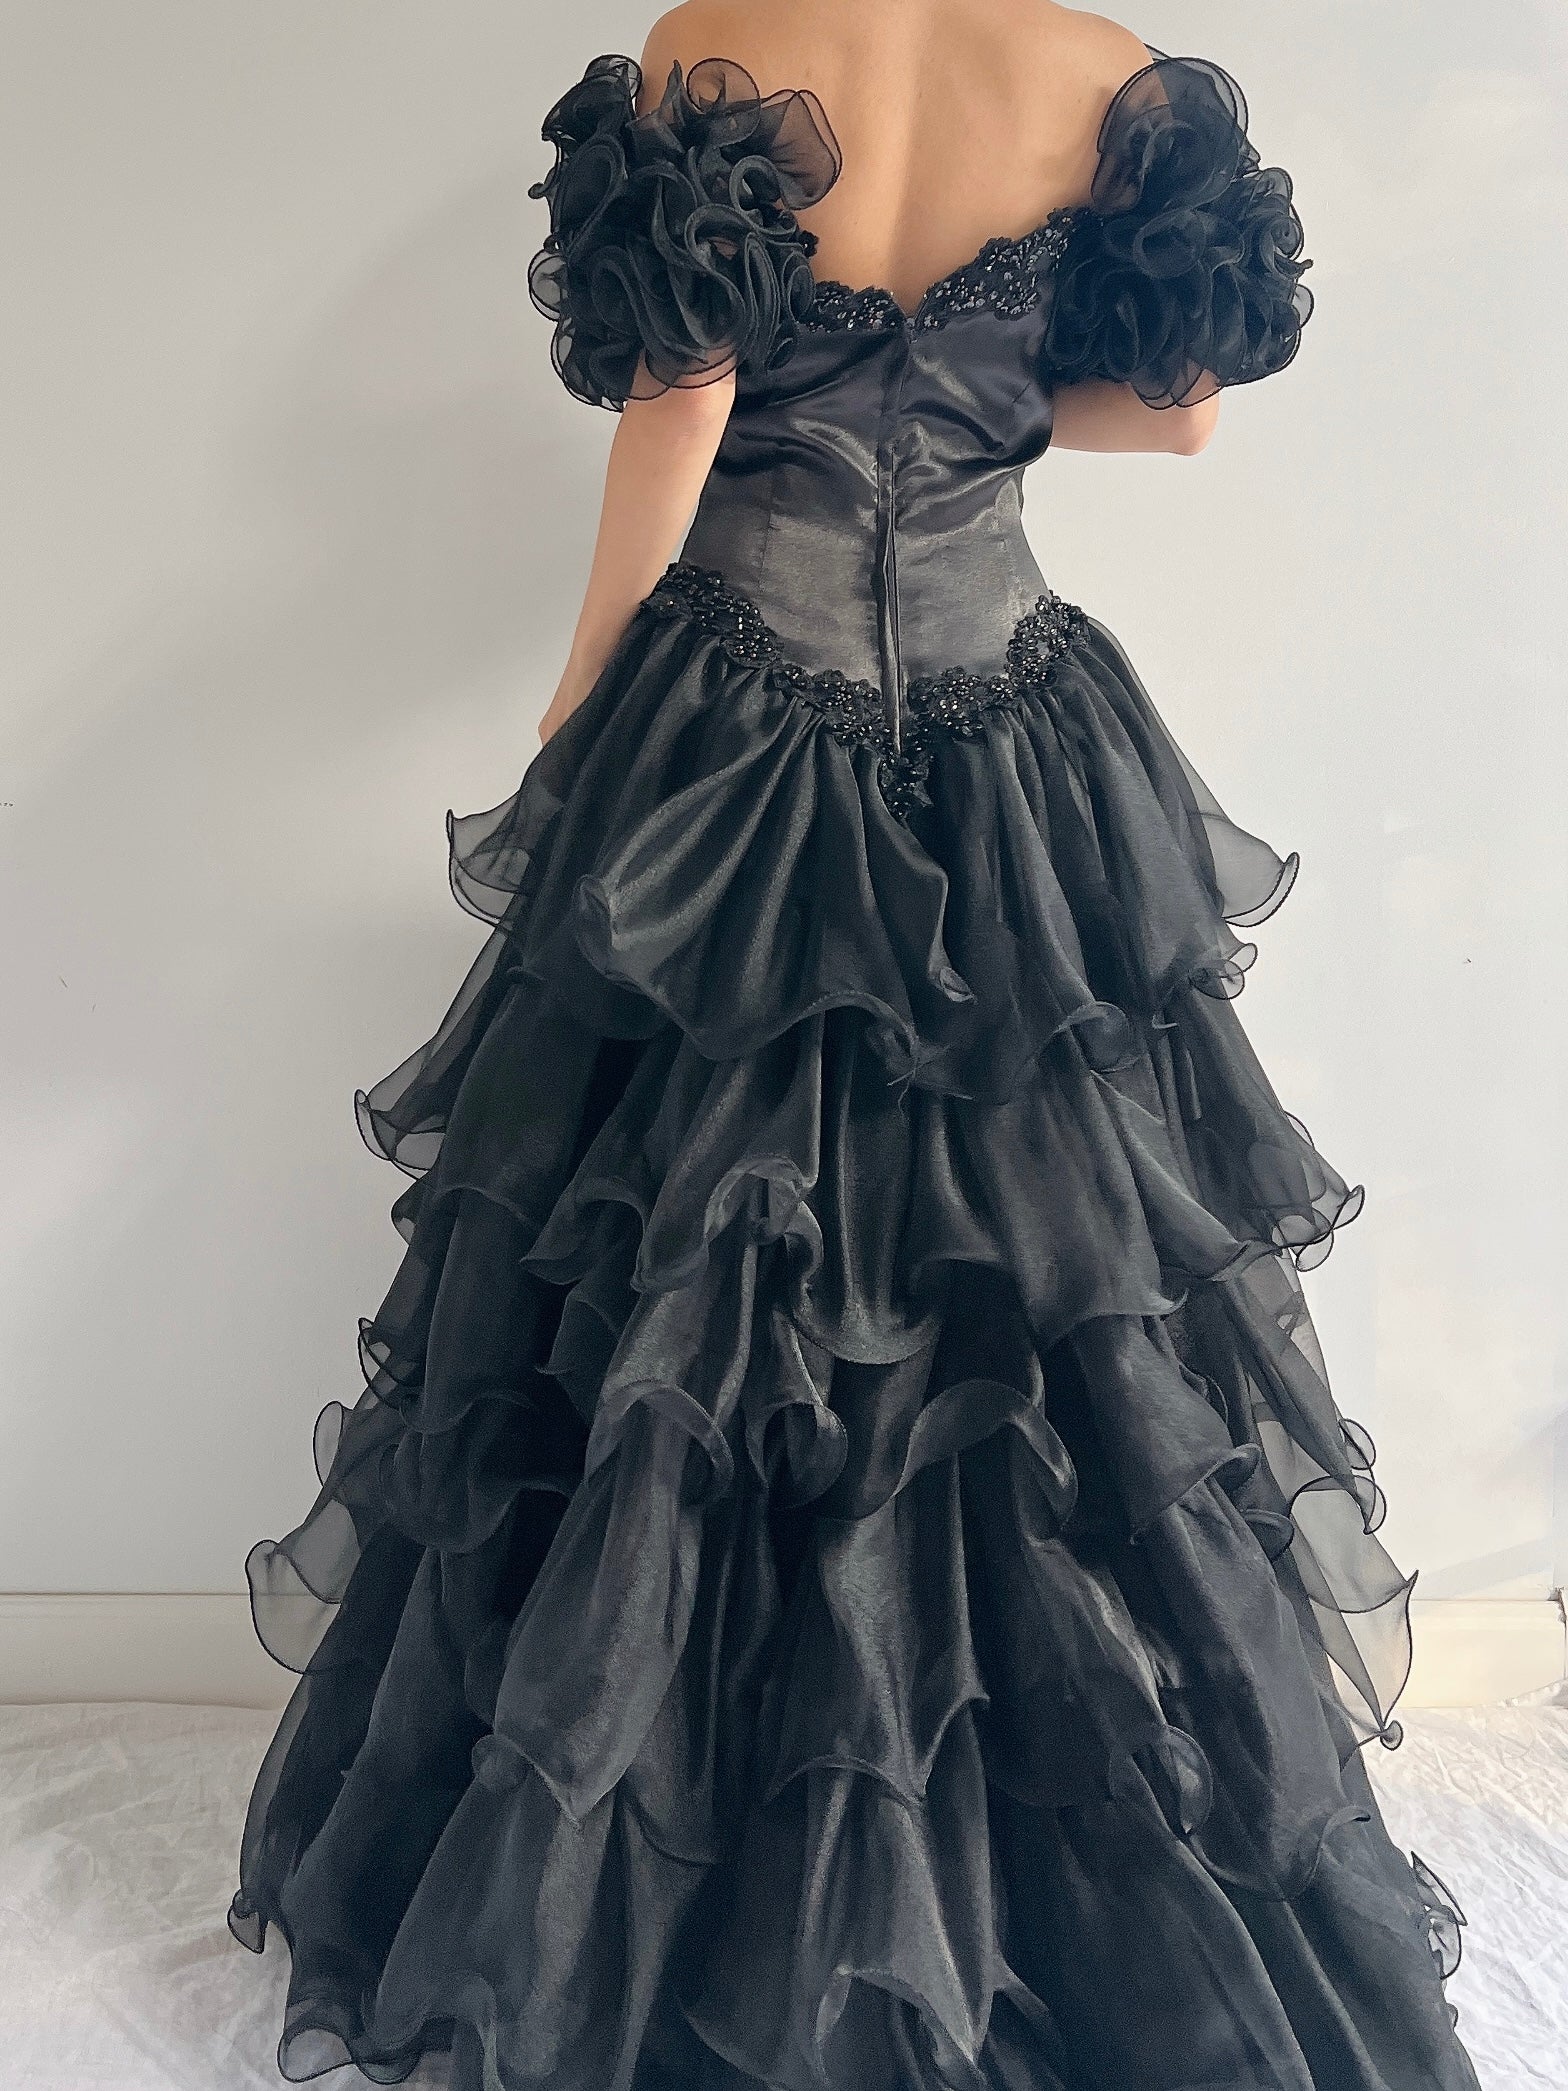 Vintage Black Ruffle Organza Dress - S